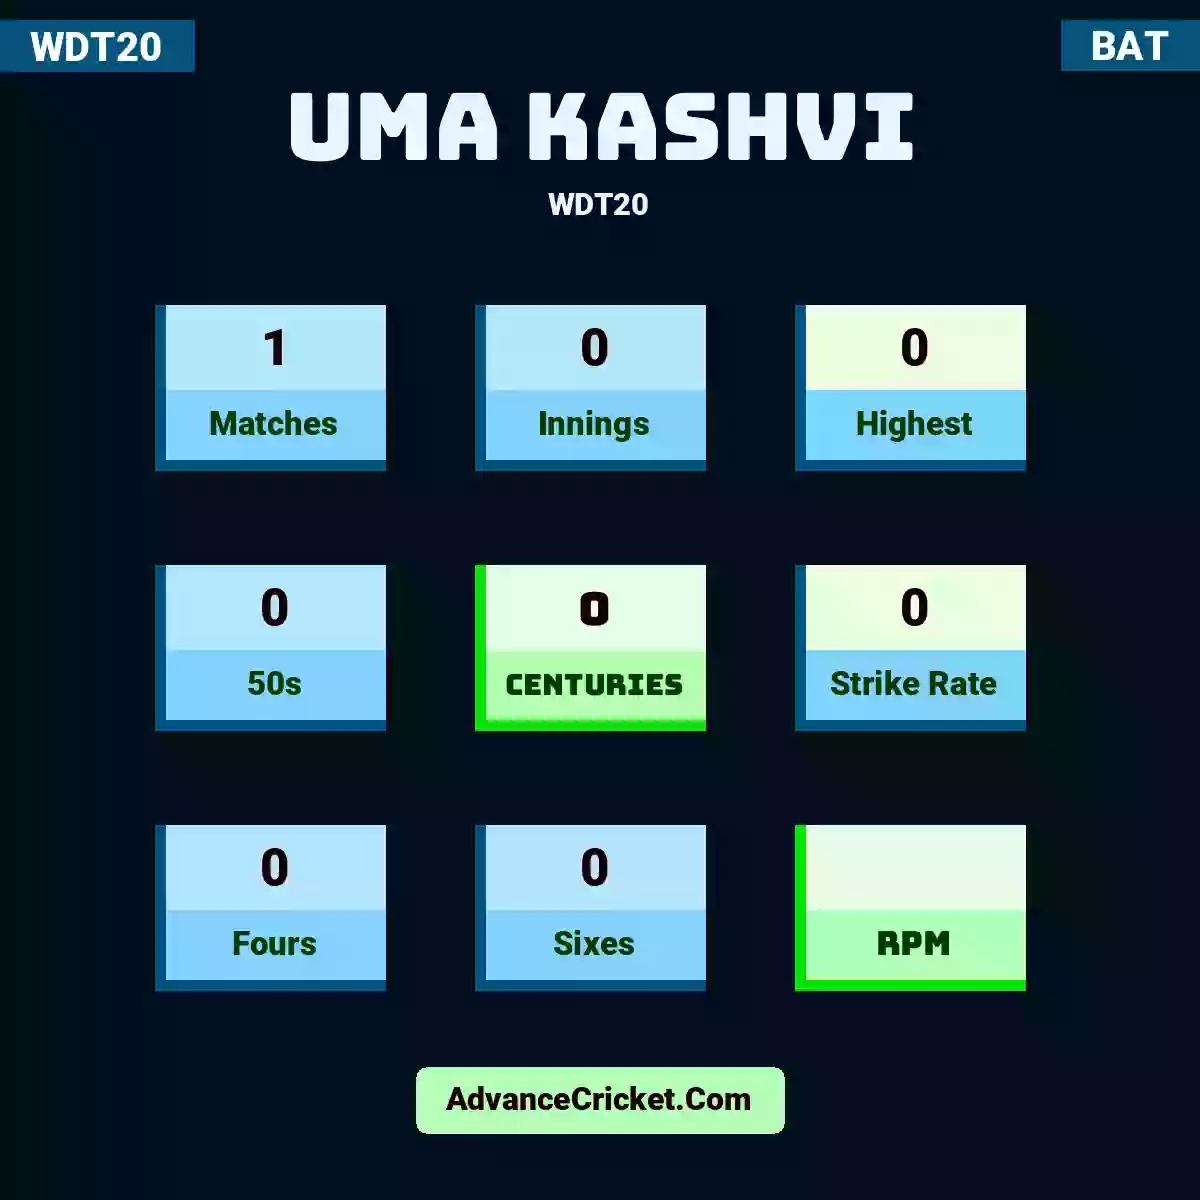 Uma Kashvi WDT20 , Uma Kashvi played 1 matches, scored 0 runs as highest, 0 half-centuries, and 0 centuries, with a strike rate of 0. U.Kashvi hit 0 fours and 0 sixes.